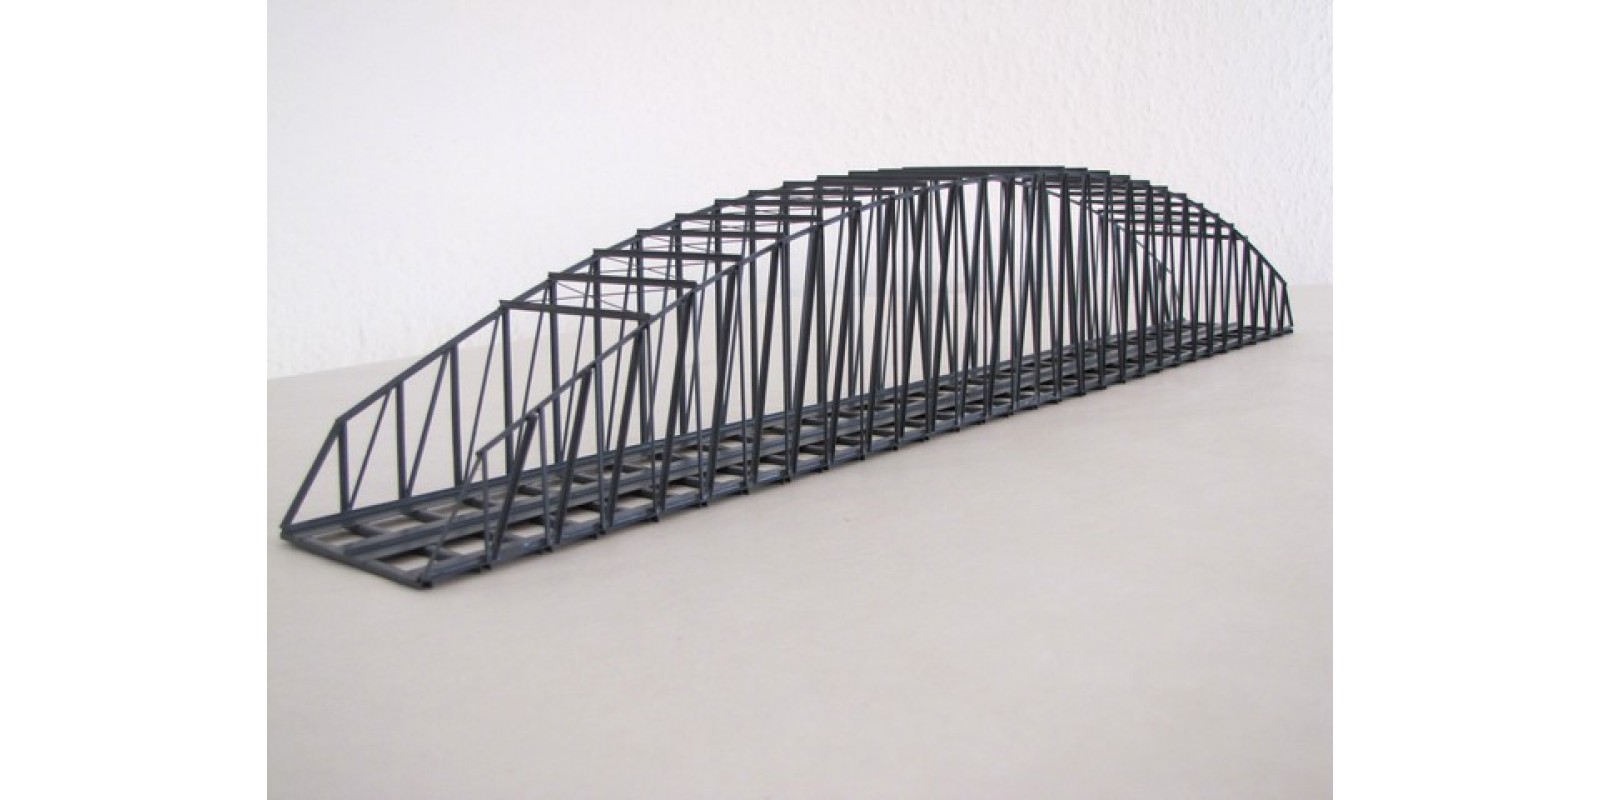 HA23170 BN50-A-2 Spur N Bogenbrücke, zweigleisig, 50 cm